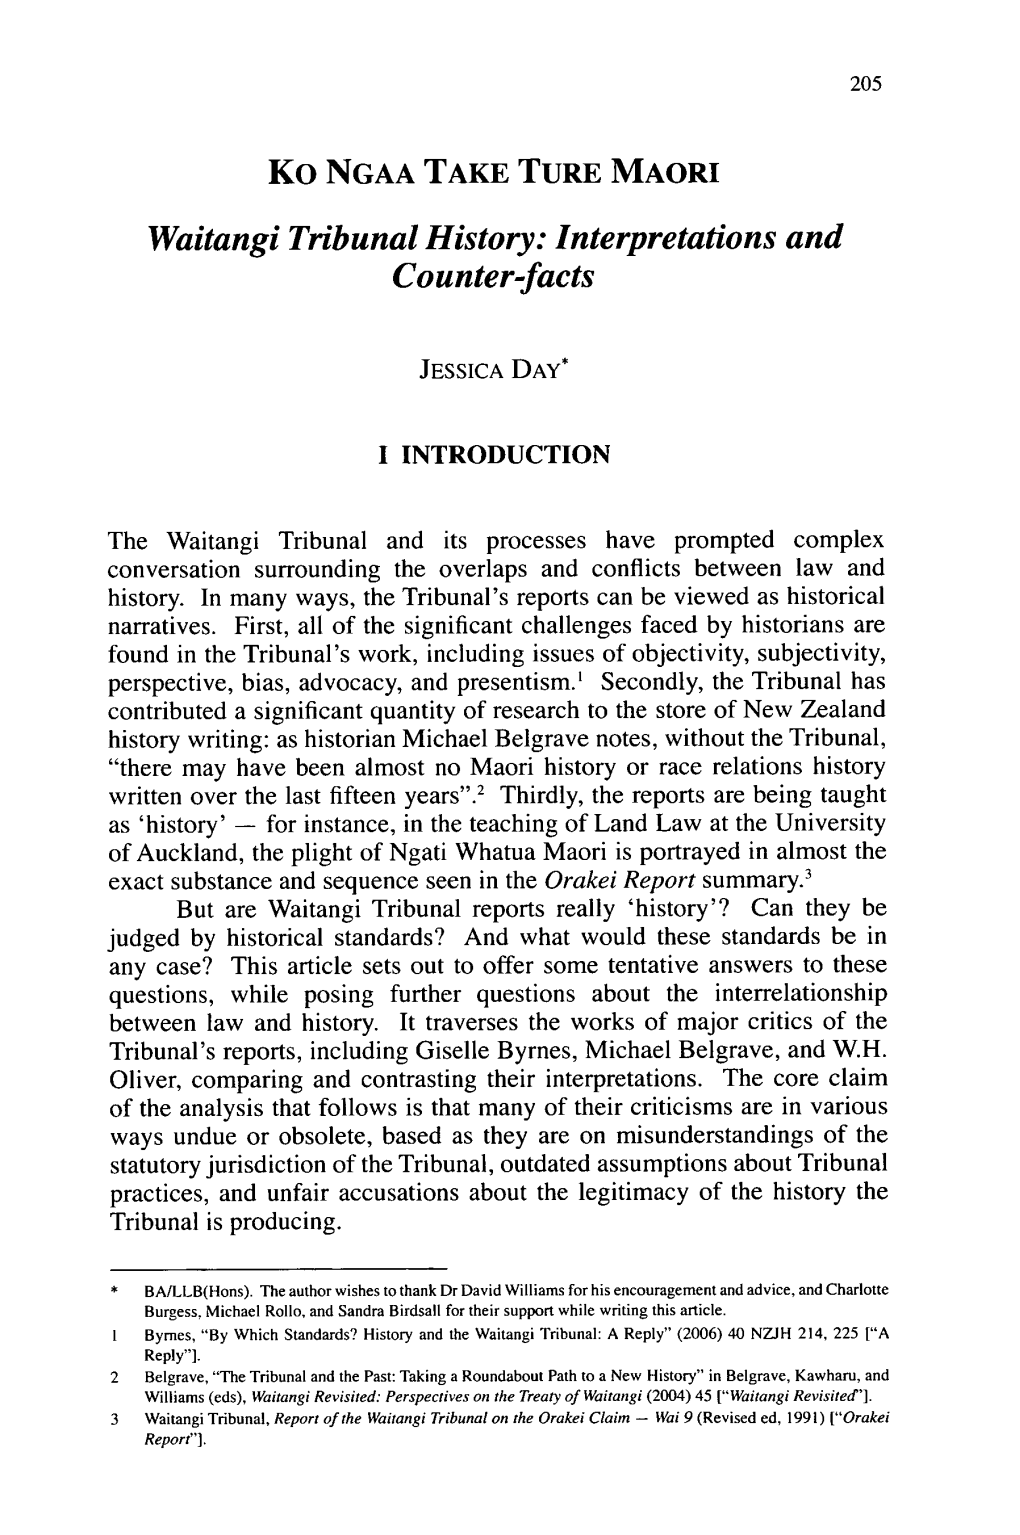 Waitangi Tribunal History: Interpretations and Counter-Facts